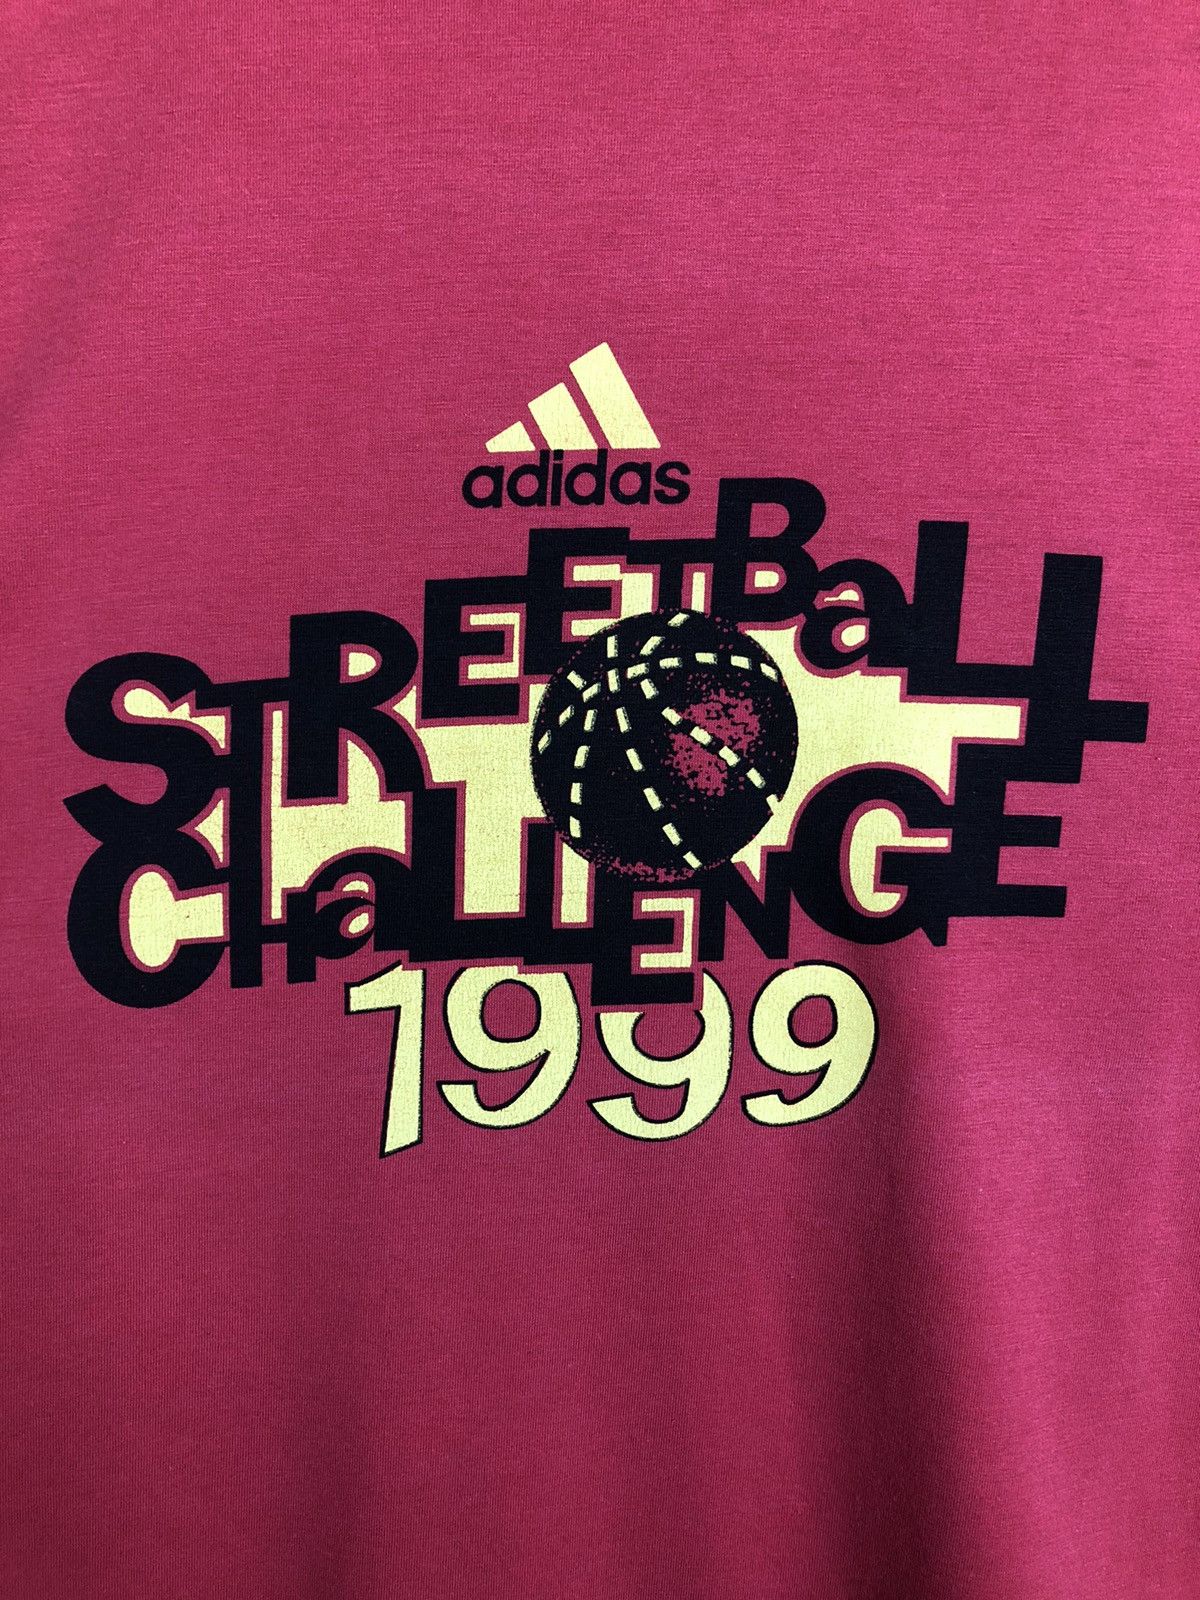 Adidas Vintage t-shirt Adidas Streetball Challenge 1999s original Size US XL / EU 56 / 4 - 4 Thumbnail